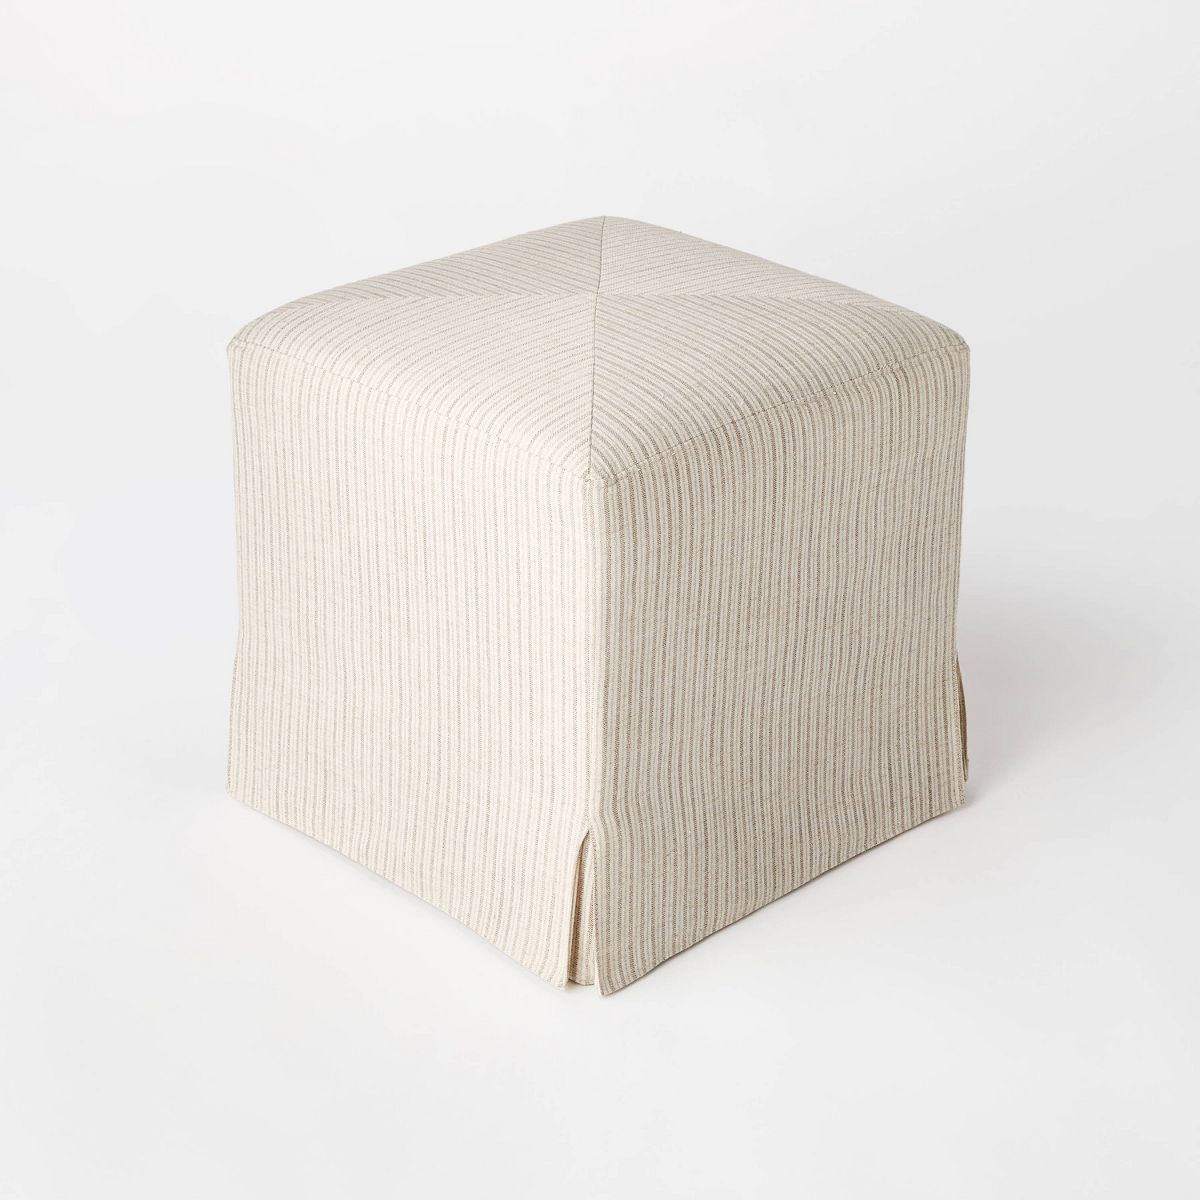 Lynwood Slipcover Cube Ottoman Gray - Threshold™ designed with Studio McGee | Target